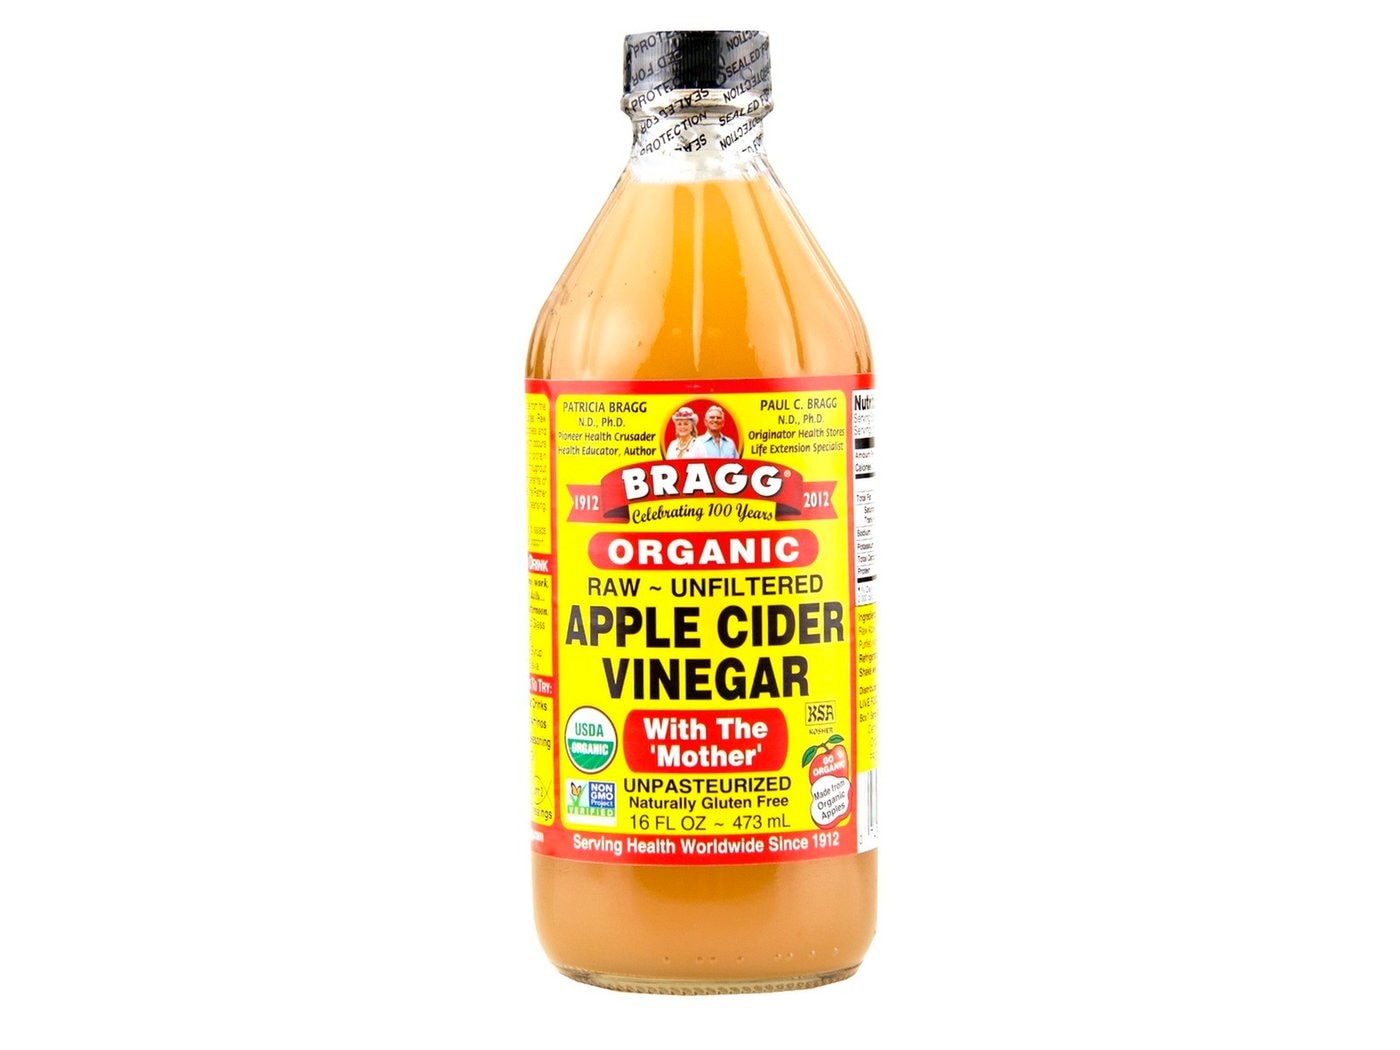 Bragg Organic Apple Cider Vinegar photo